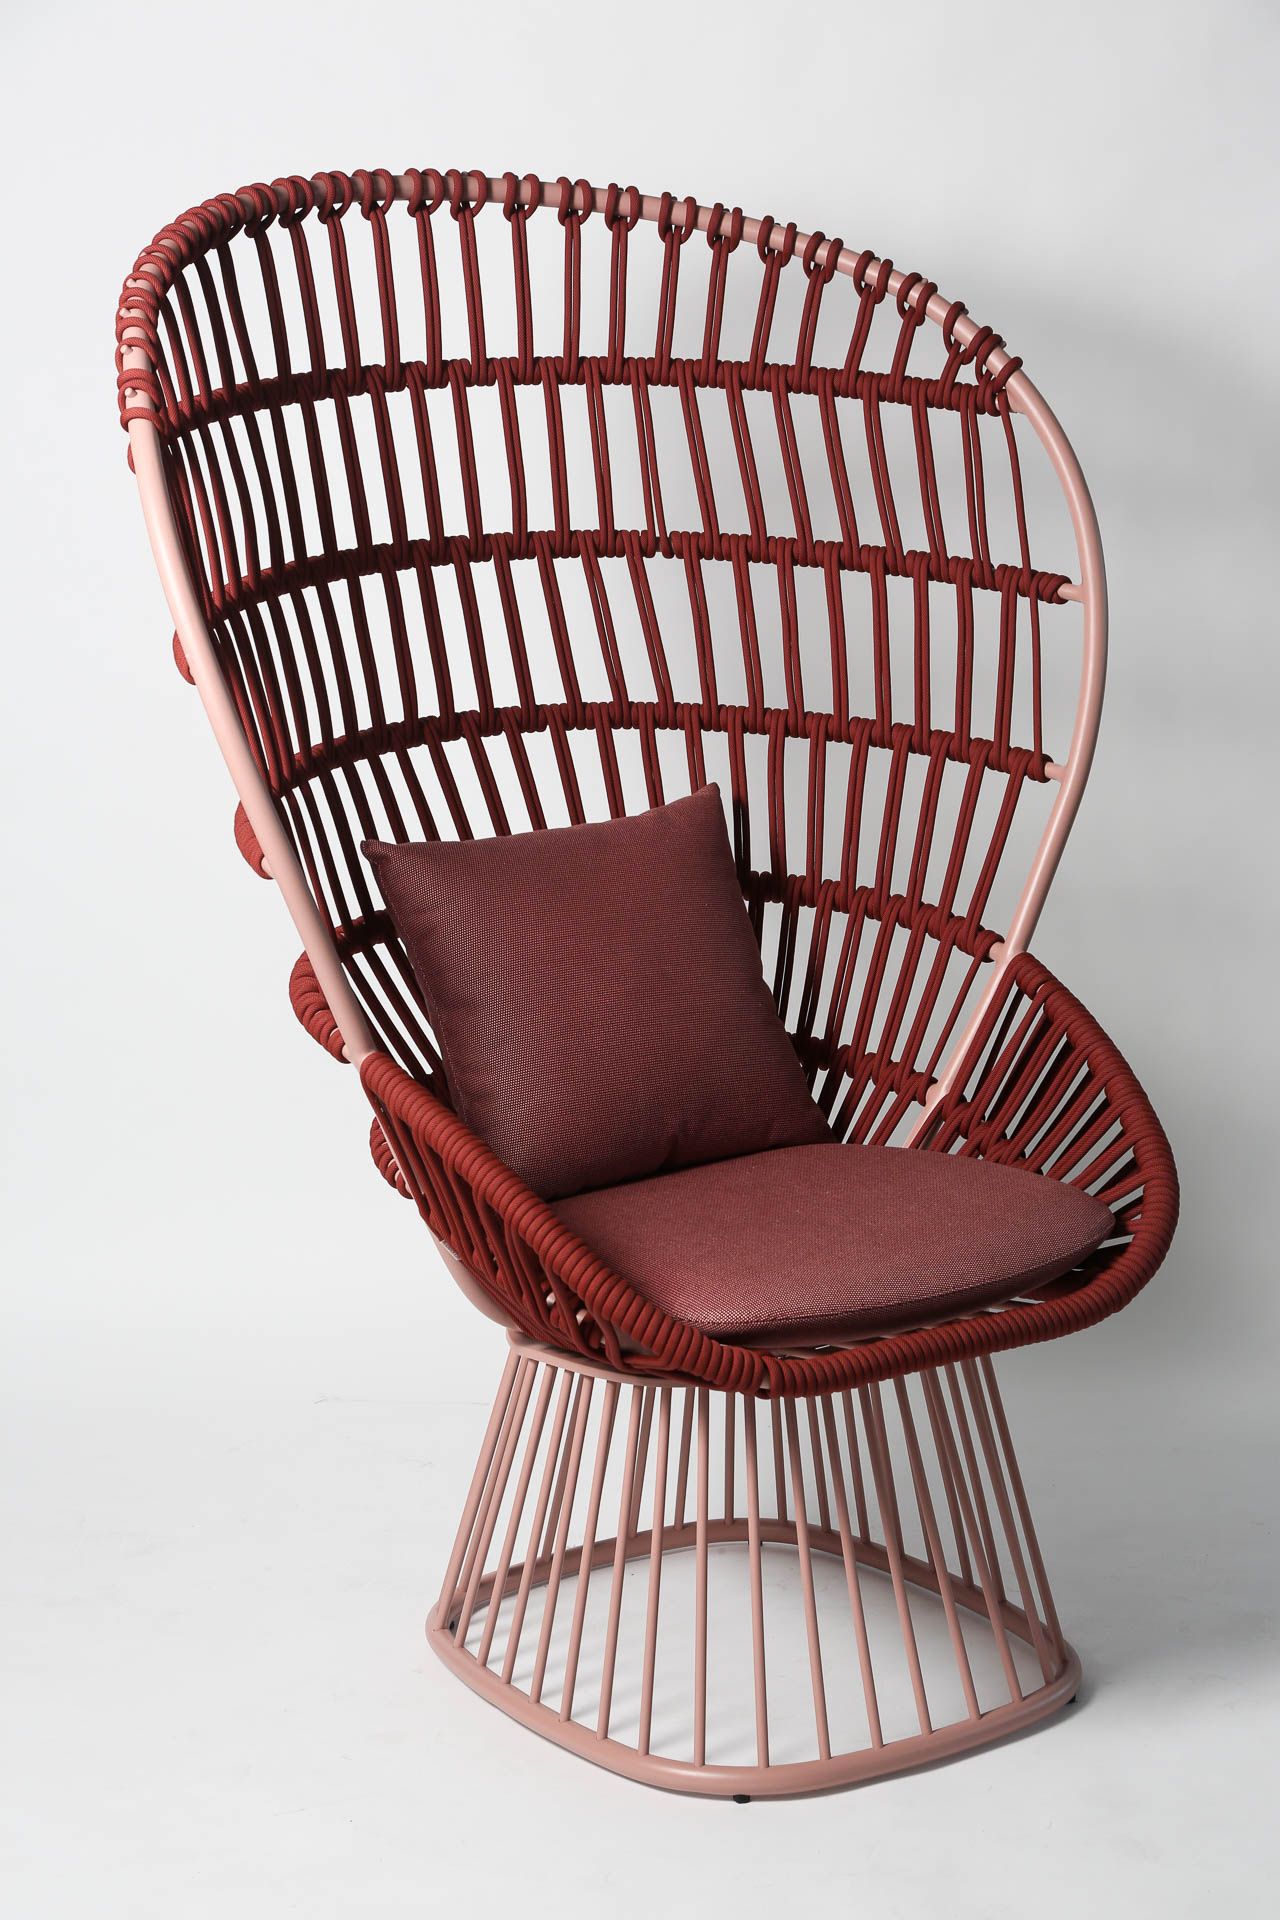 Null KETTAL, DOSHI LEVIEN, Cala Club扶手椅, 铝制底座和框架

绳索、红色座垫

高：152.3厘米（座椅：39.3厘米），&hellip;